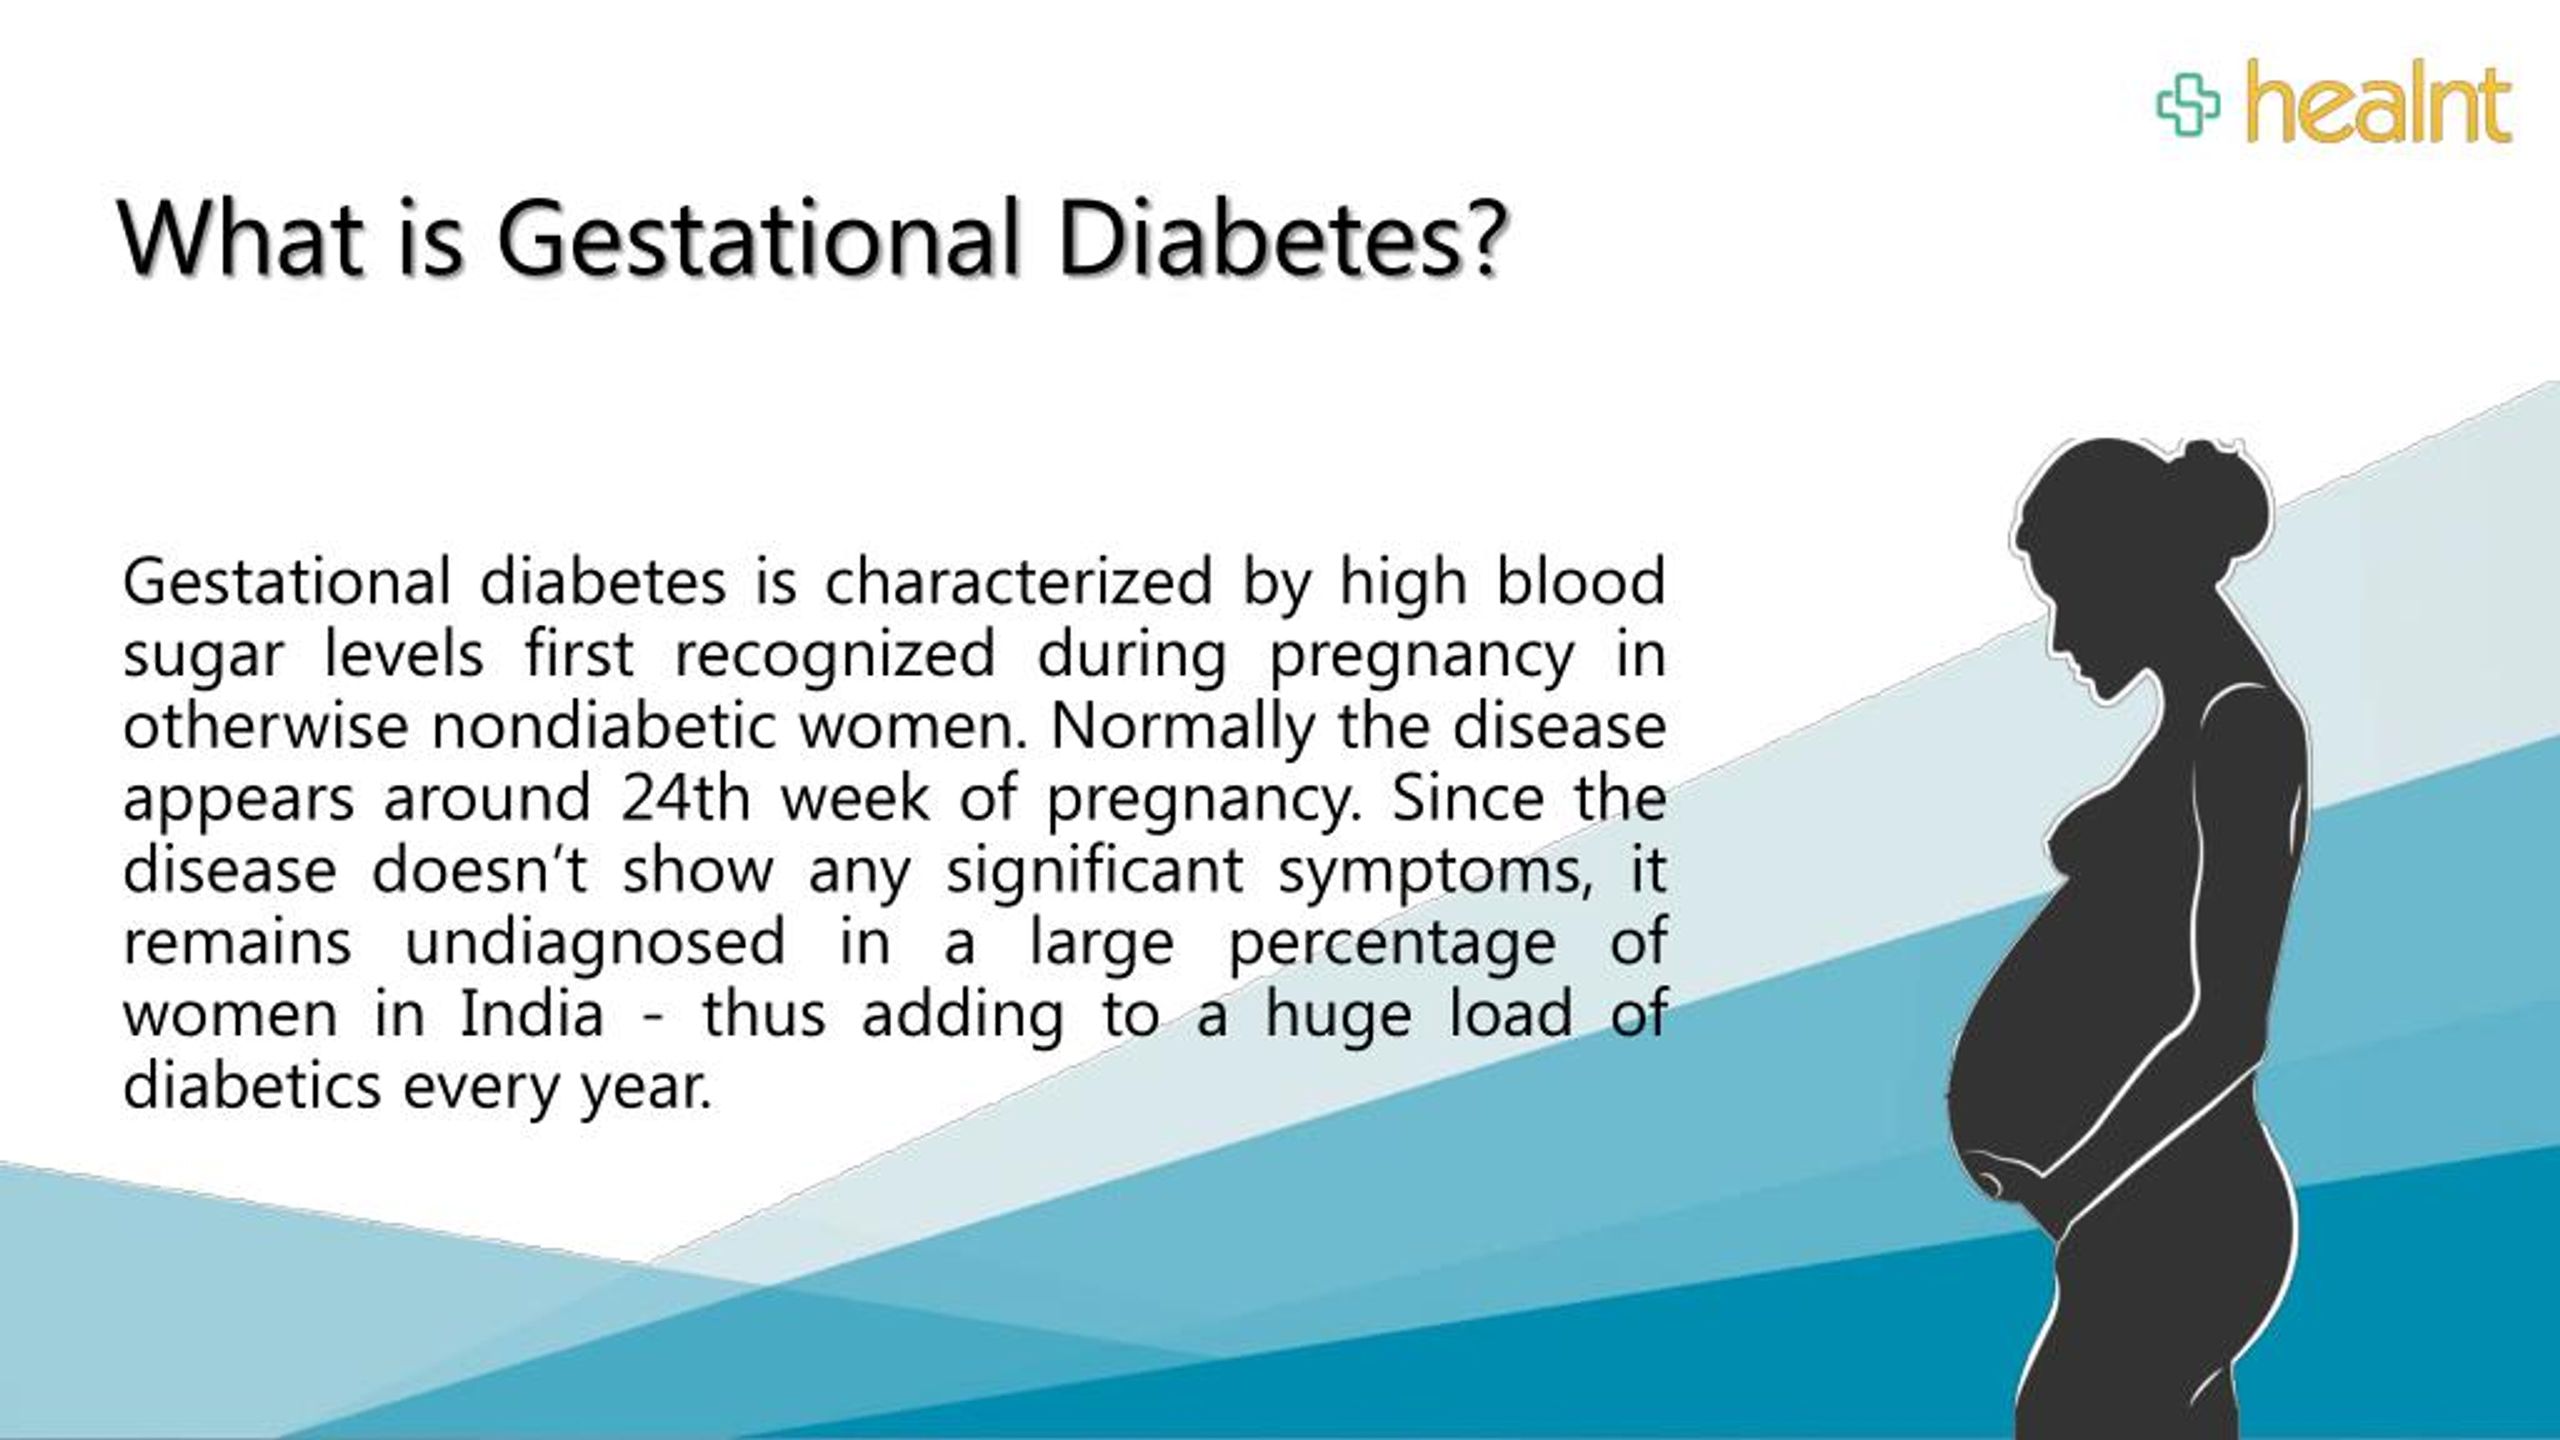 gestational diabetes essay